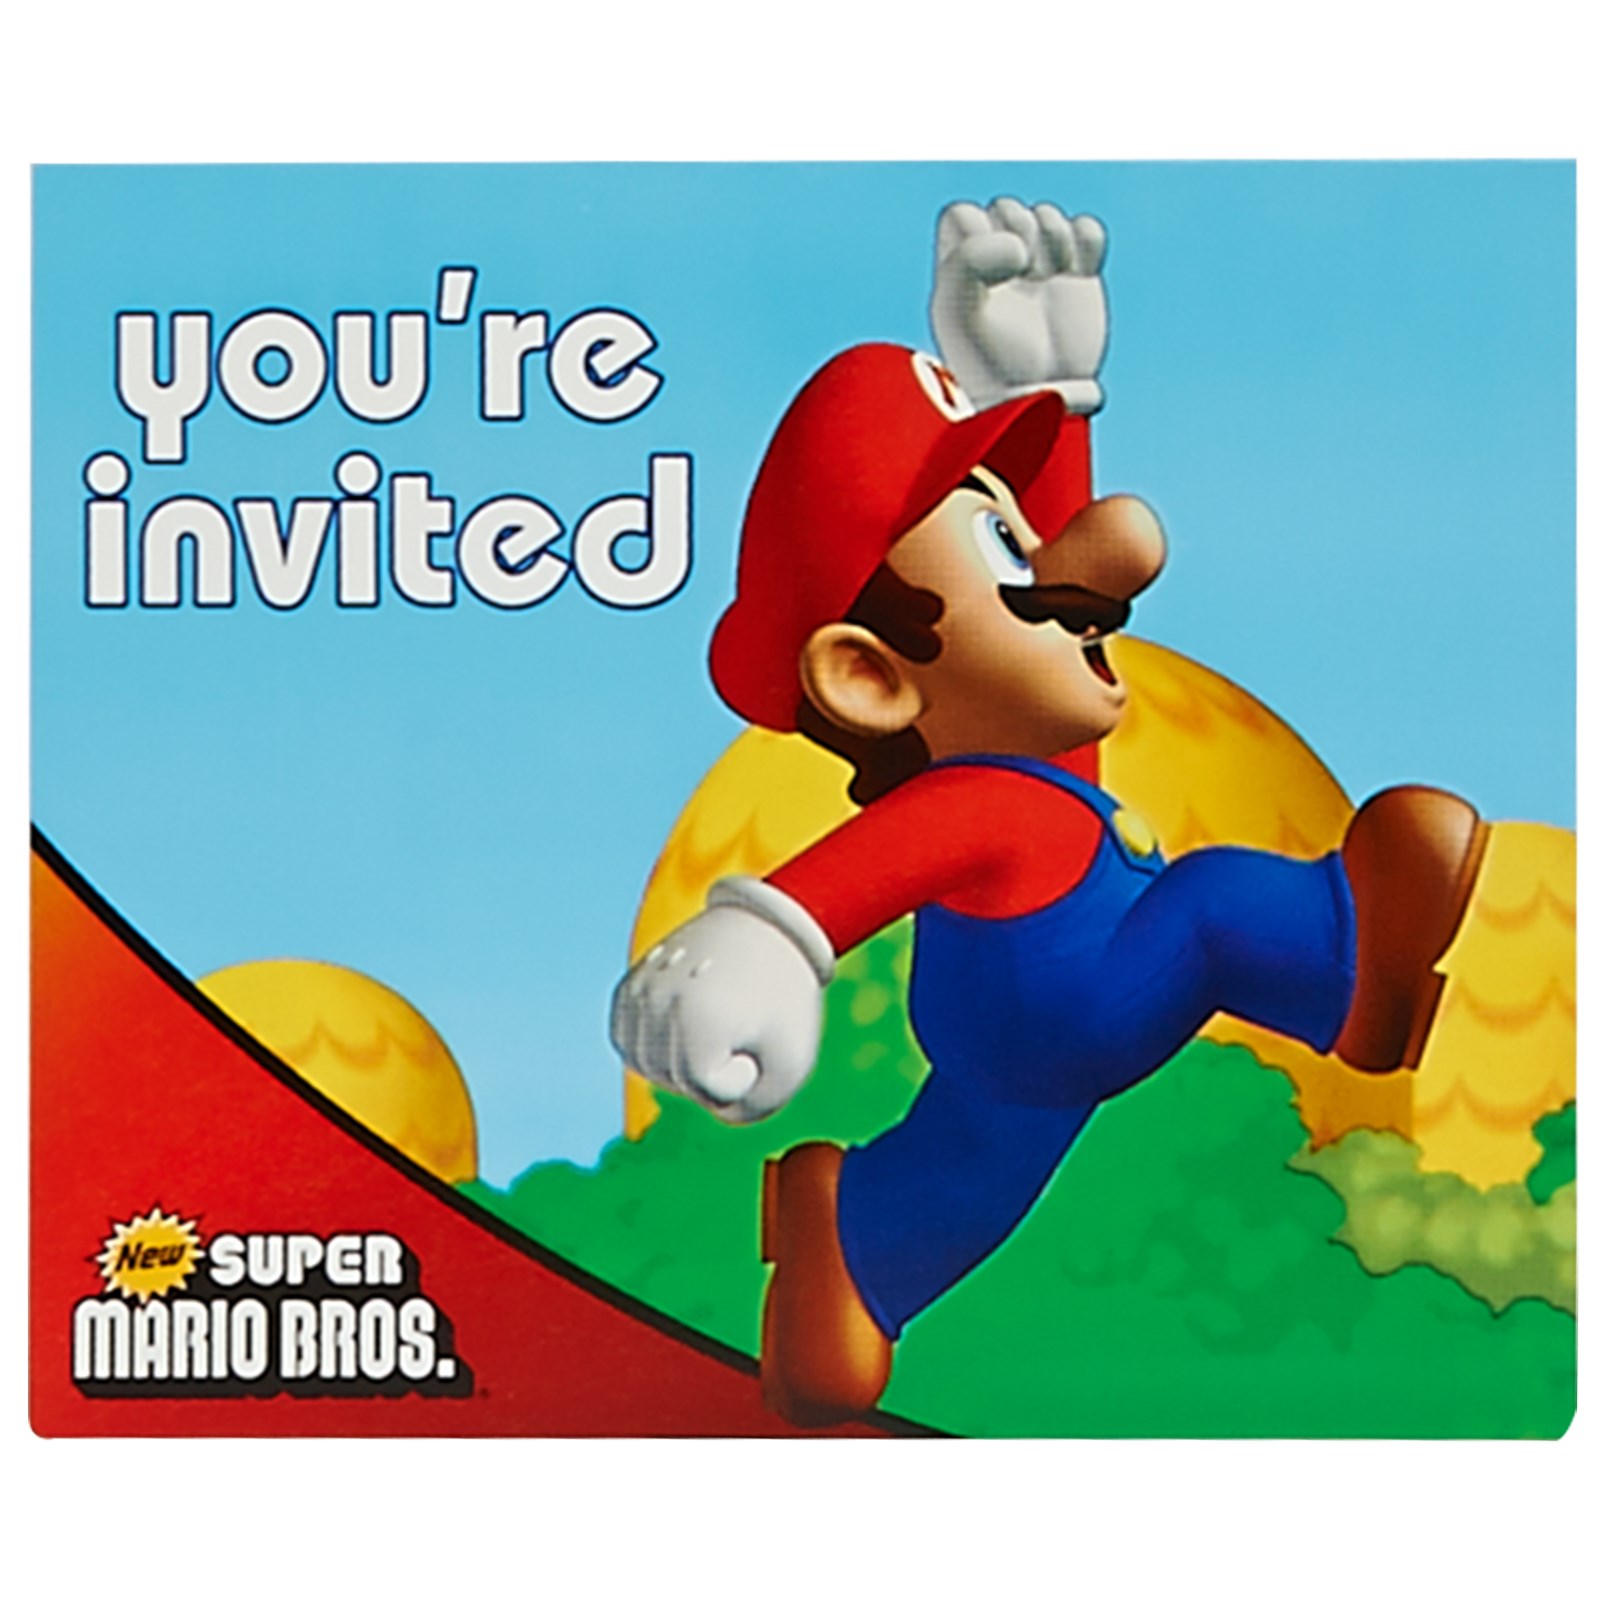 Super Mario Party Invitations